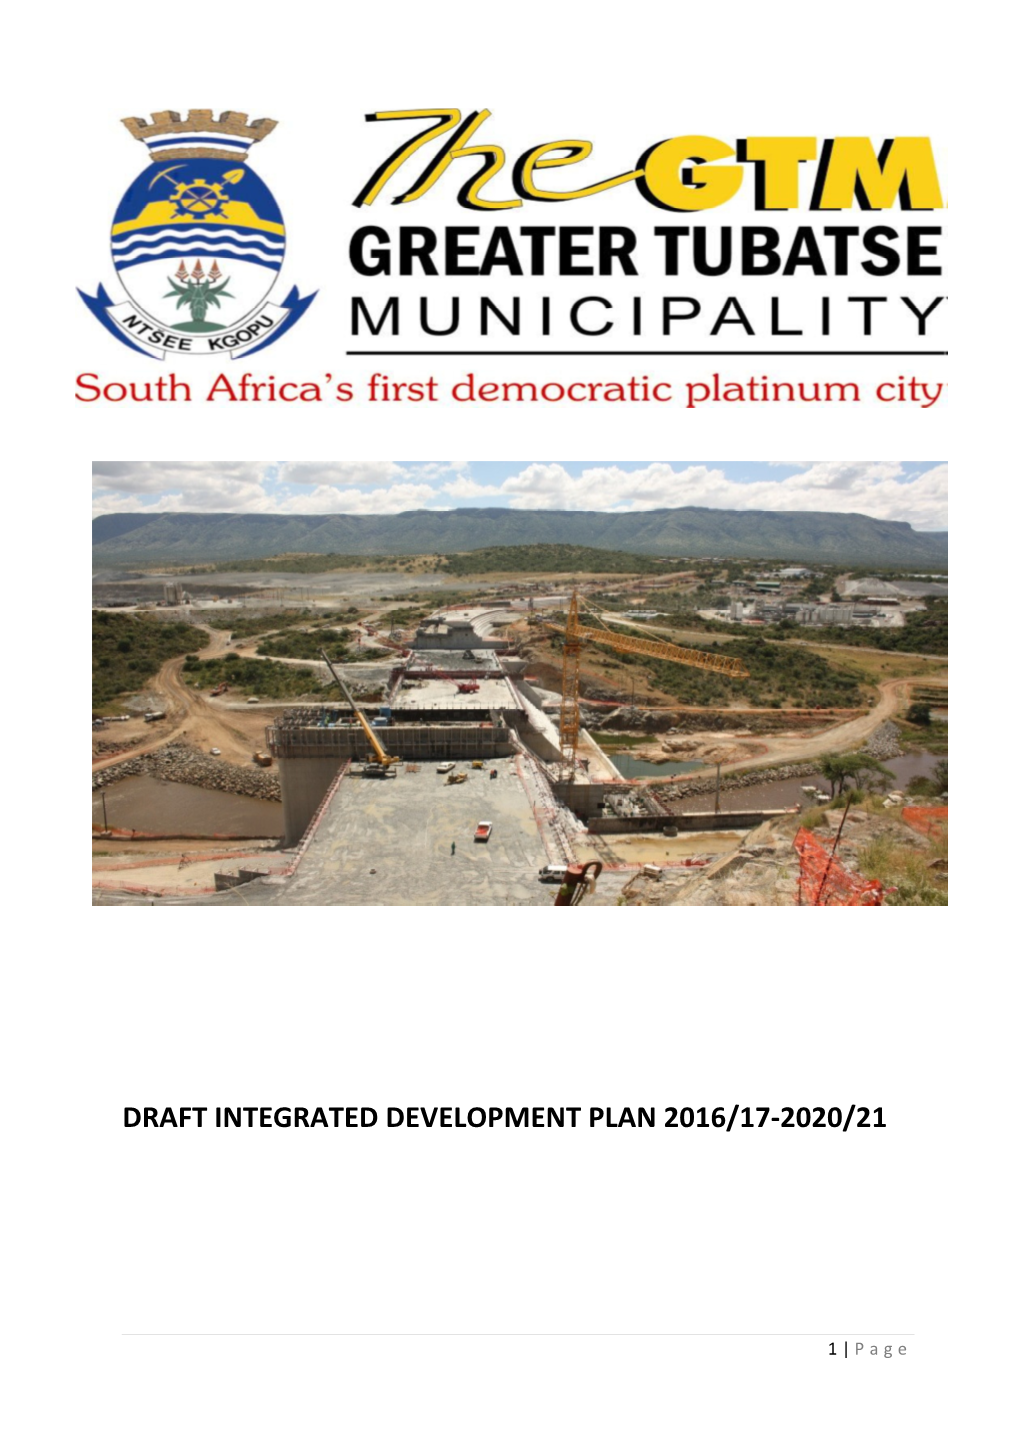 Draft Integrated Development Plan 2016/17-2020/21